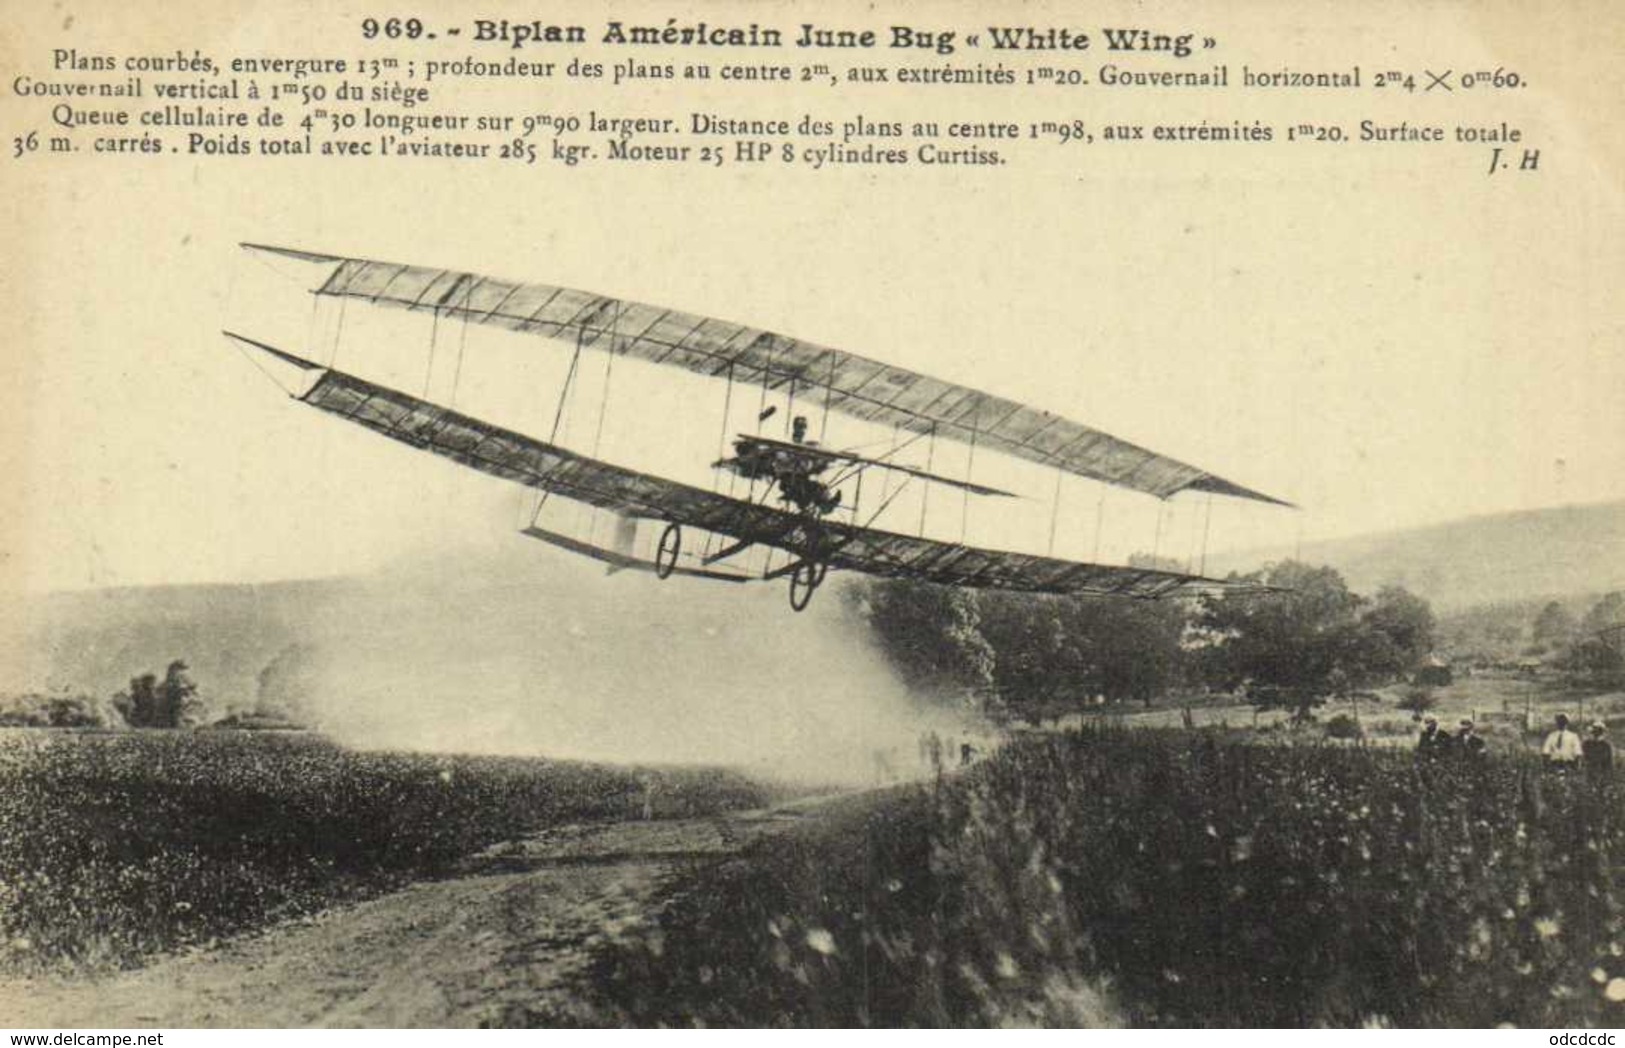 Biplan Americain June Bug " White Wing" RV - ....-1914: Precursors